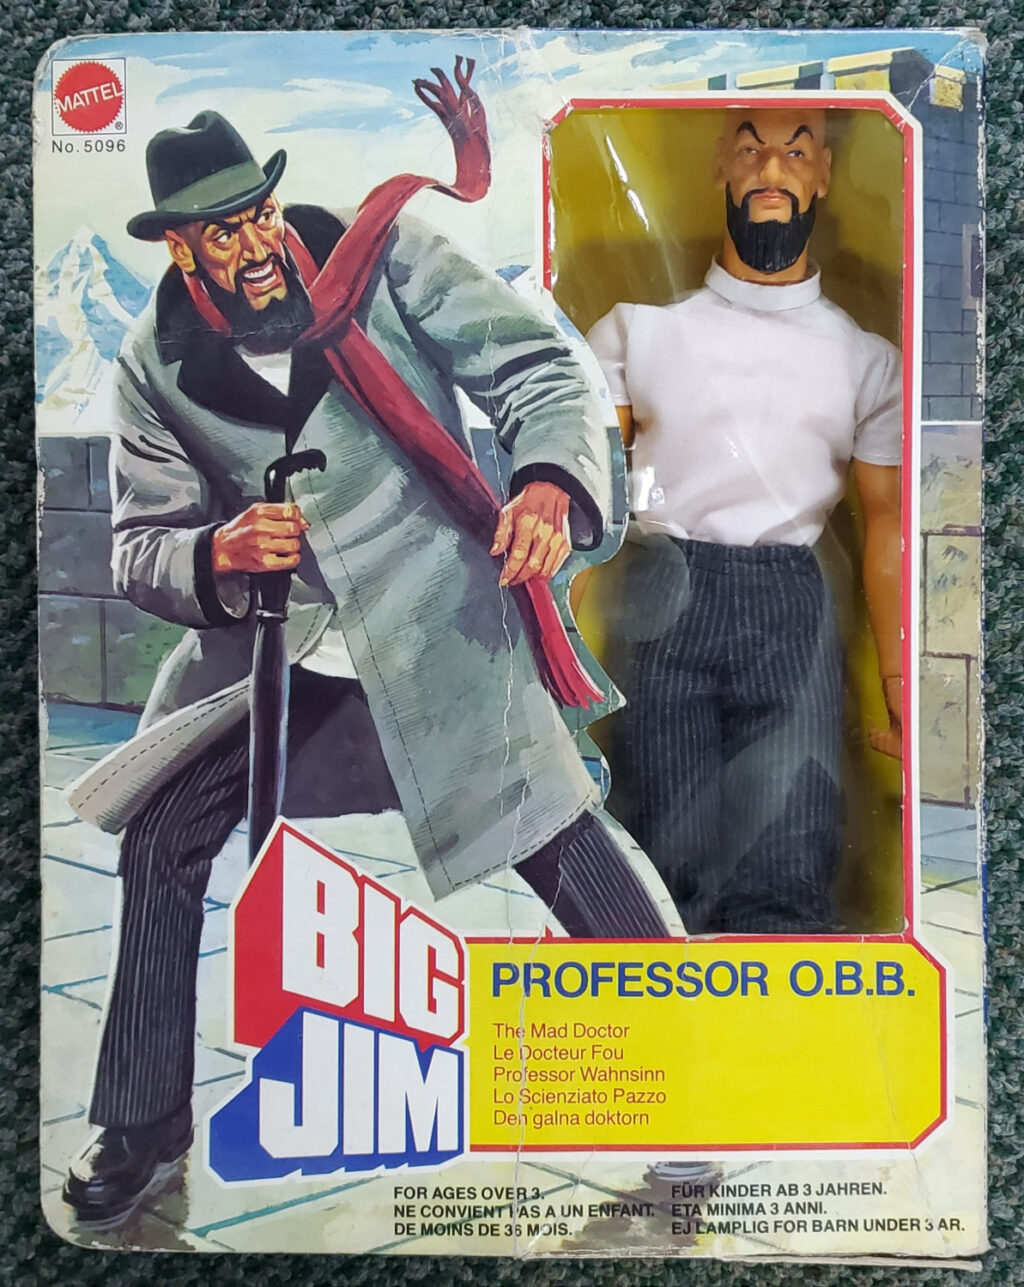 1981 Mattel Big Jim Professor O.B.B. The Mad Doctor Action Figure: Mint in Box 1